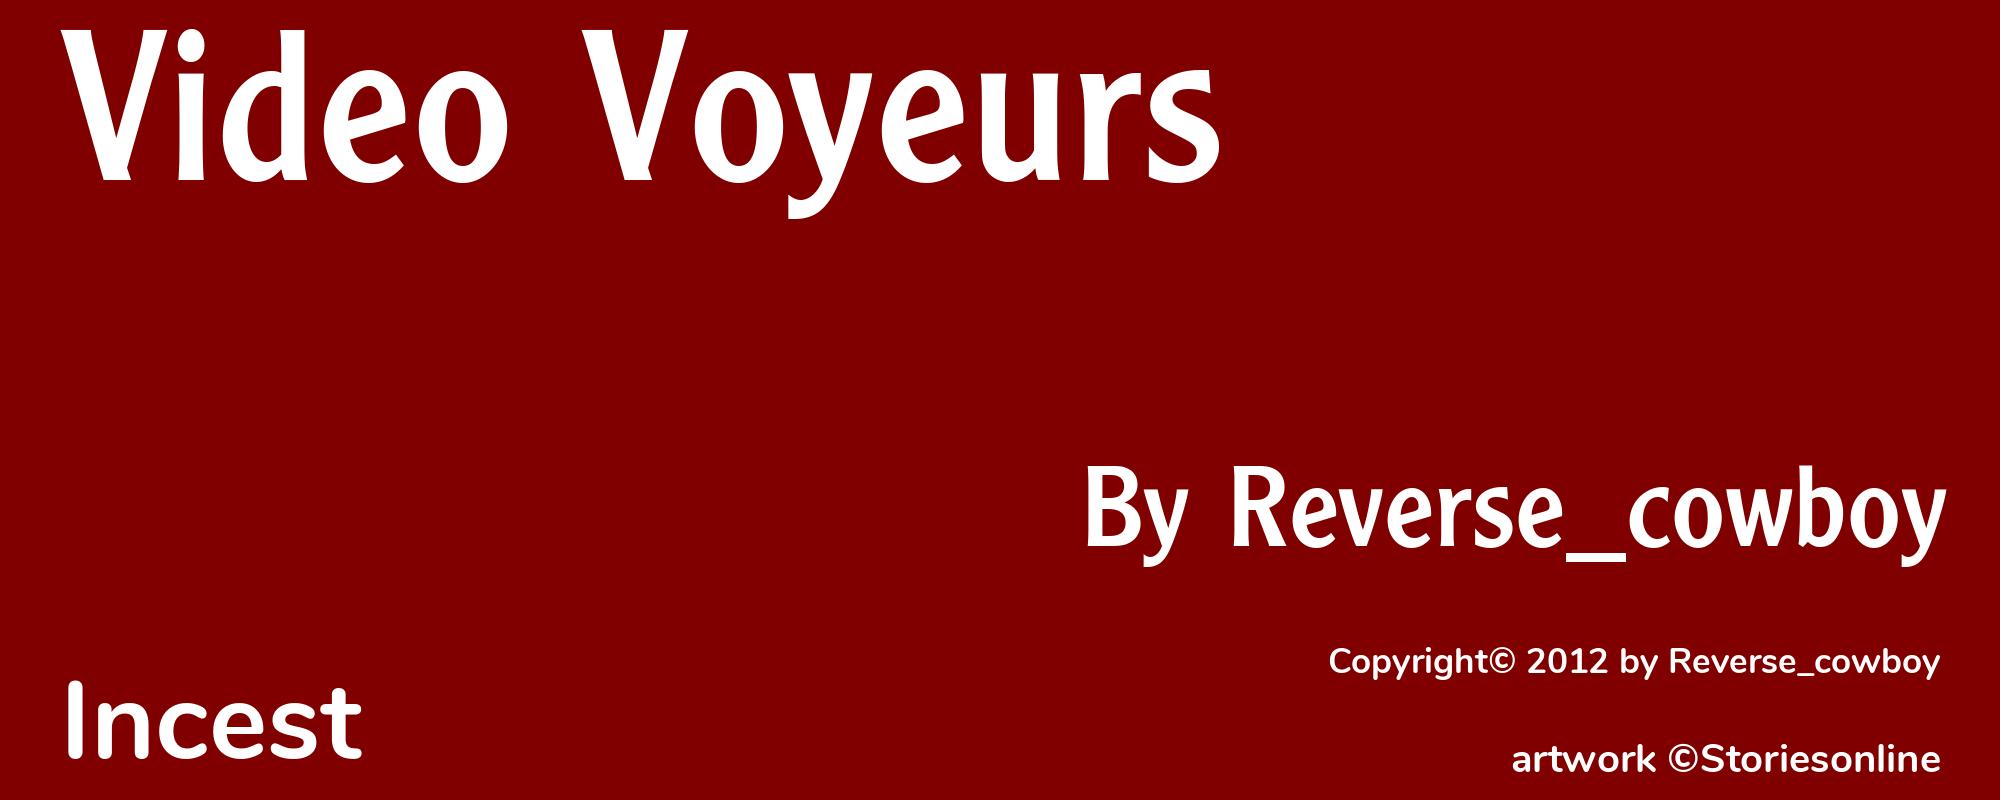 Video Voyeurs - Cover